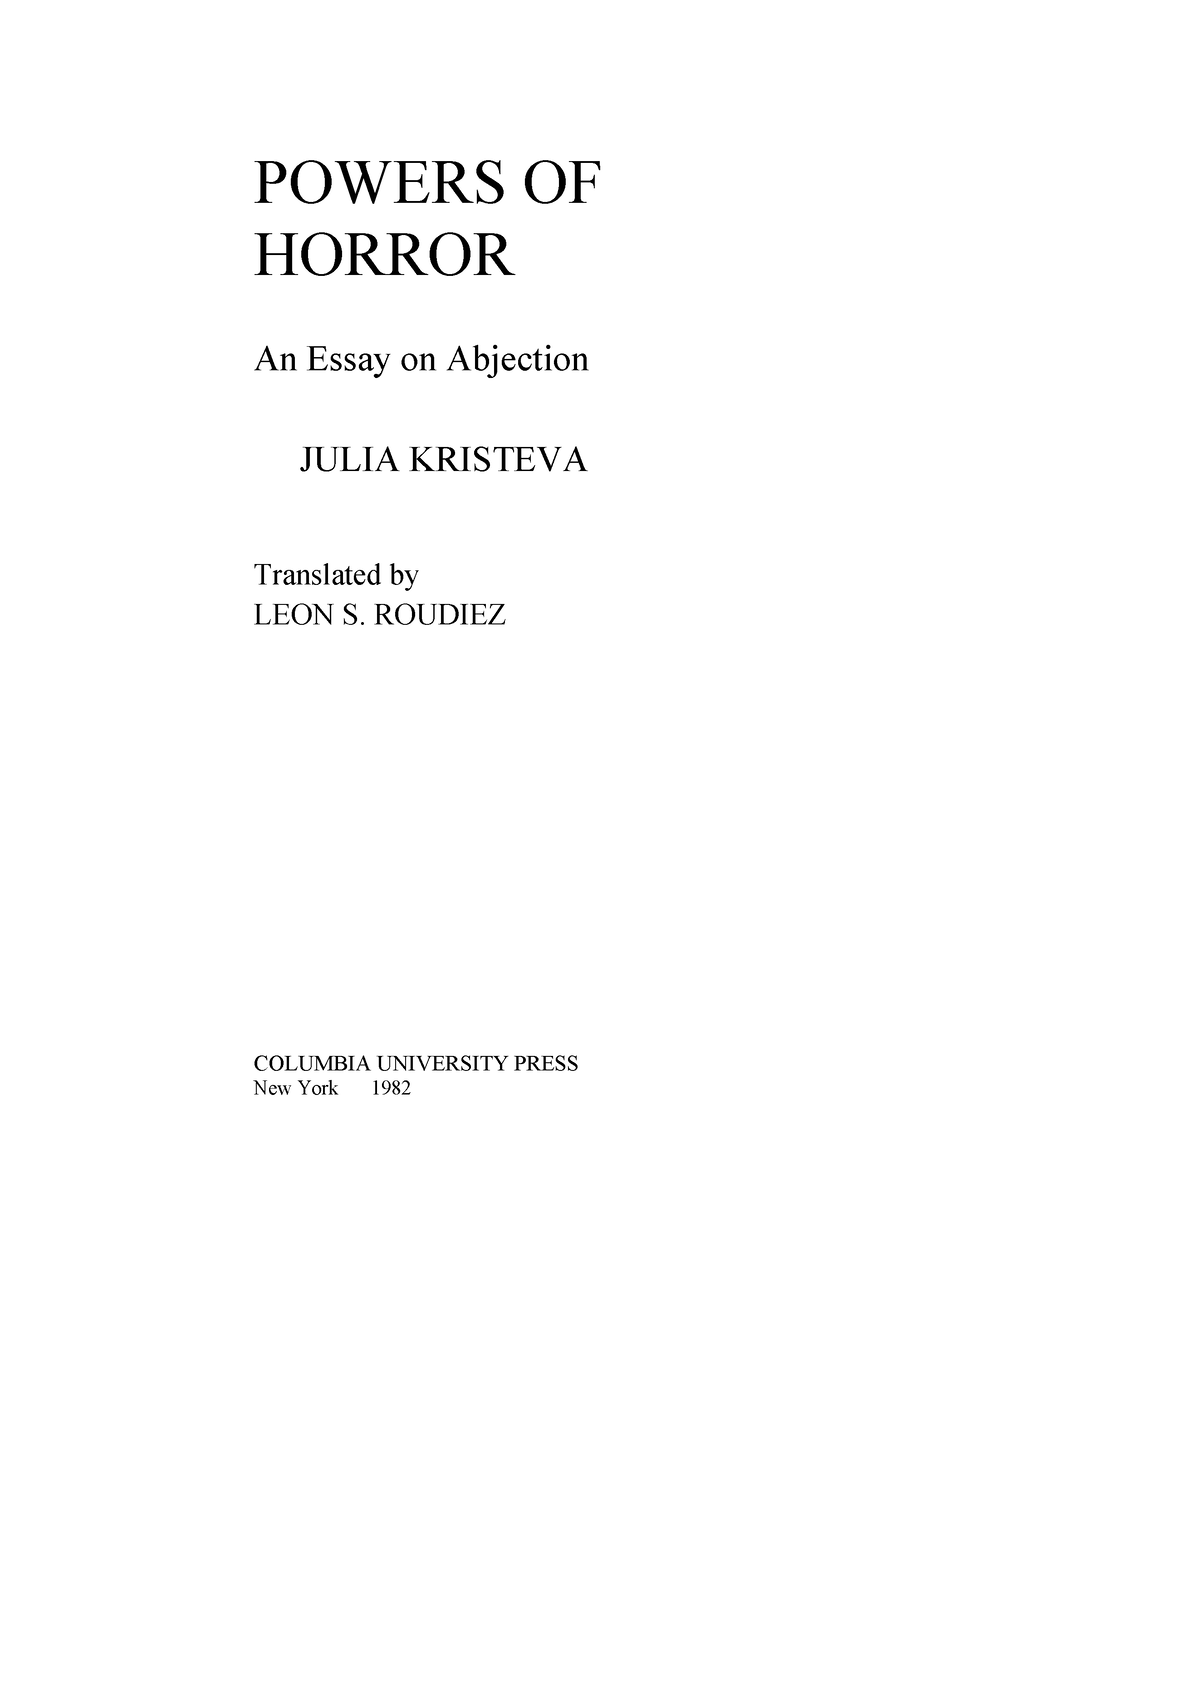 powers of horror an essay on abjection by julia kristeva